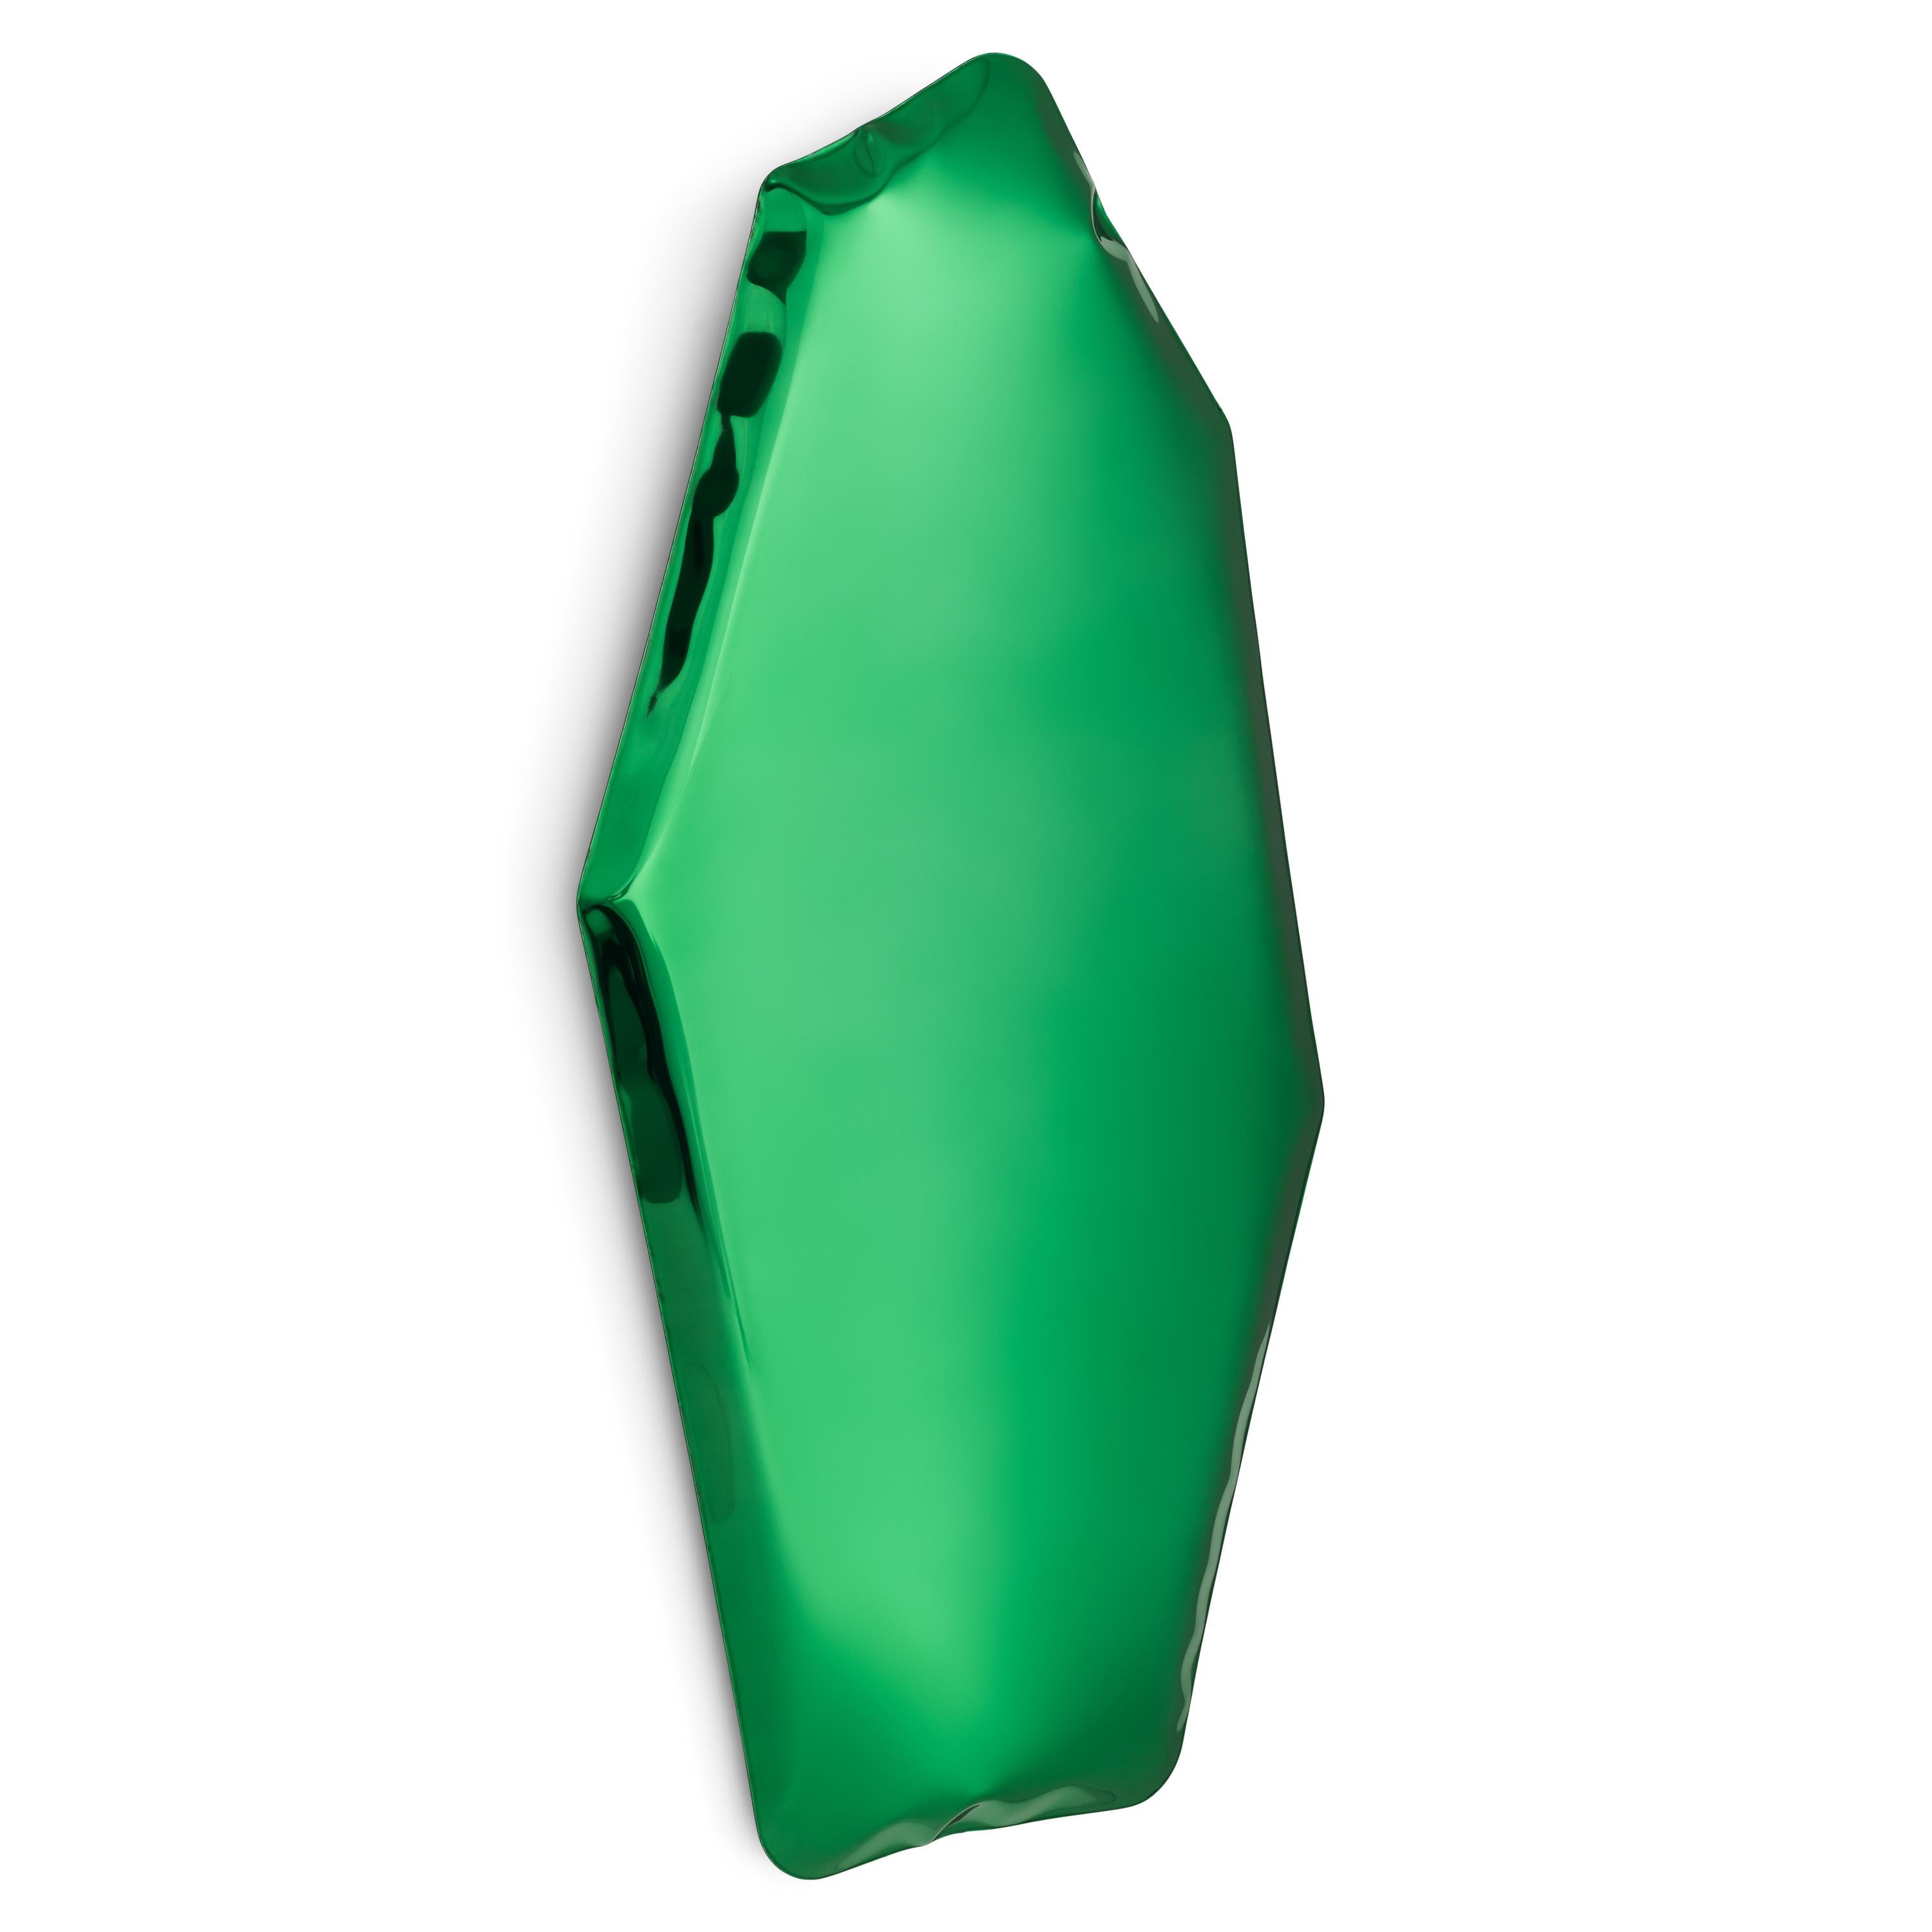 Miroir mural sculptural Emerald C4 de Zieta
Dimensions : D 6 x L 50 x H 100 cm 
Matériau : Acier inoxydable. 
Finition : Emeraude. 
Disponible en finitions : Acier inoxydable, Deep Space Blue, Emerald, Saphire, Saphire/Emerald, Dark Matter et Red